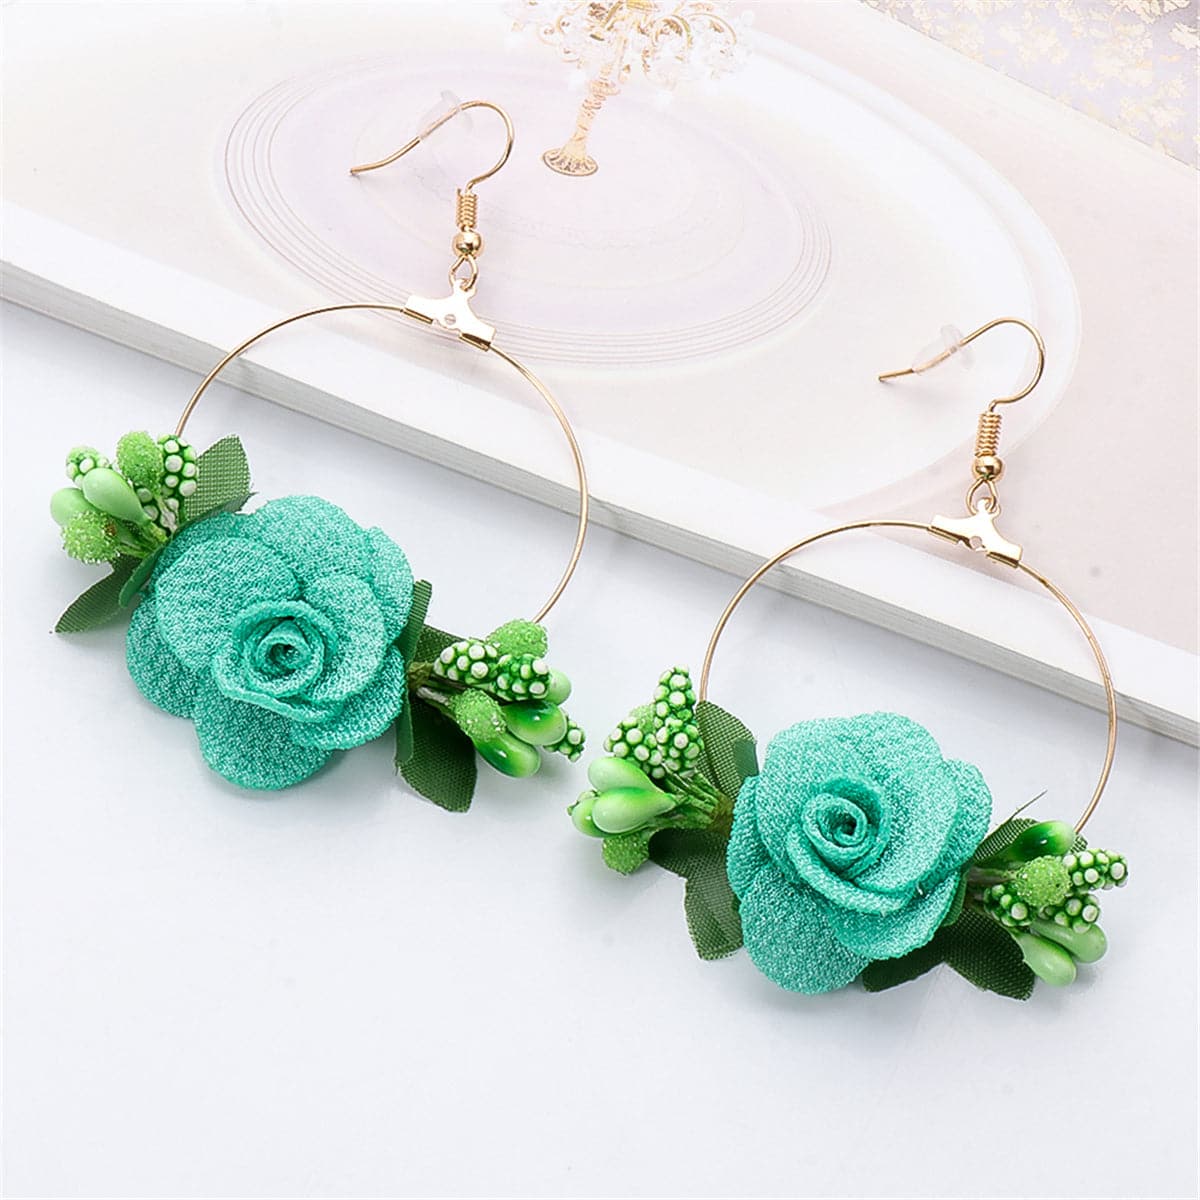 Green Lace & Resin 18K Gold-Plated Flower Drop Earrings